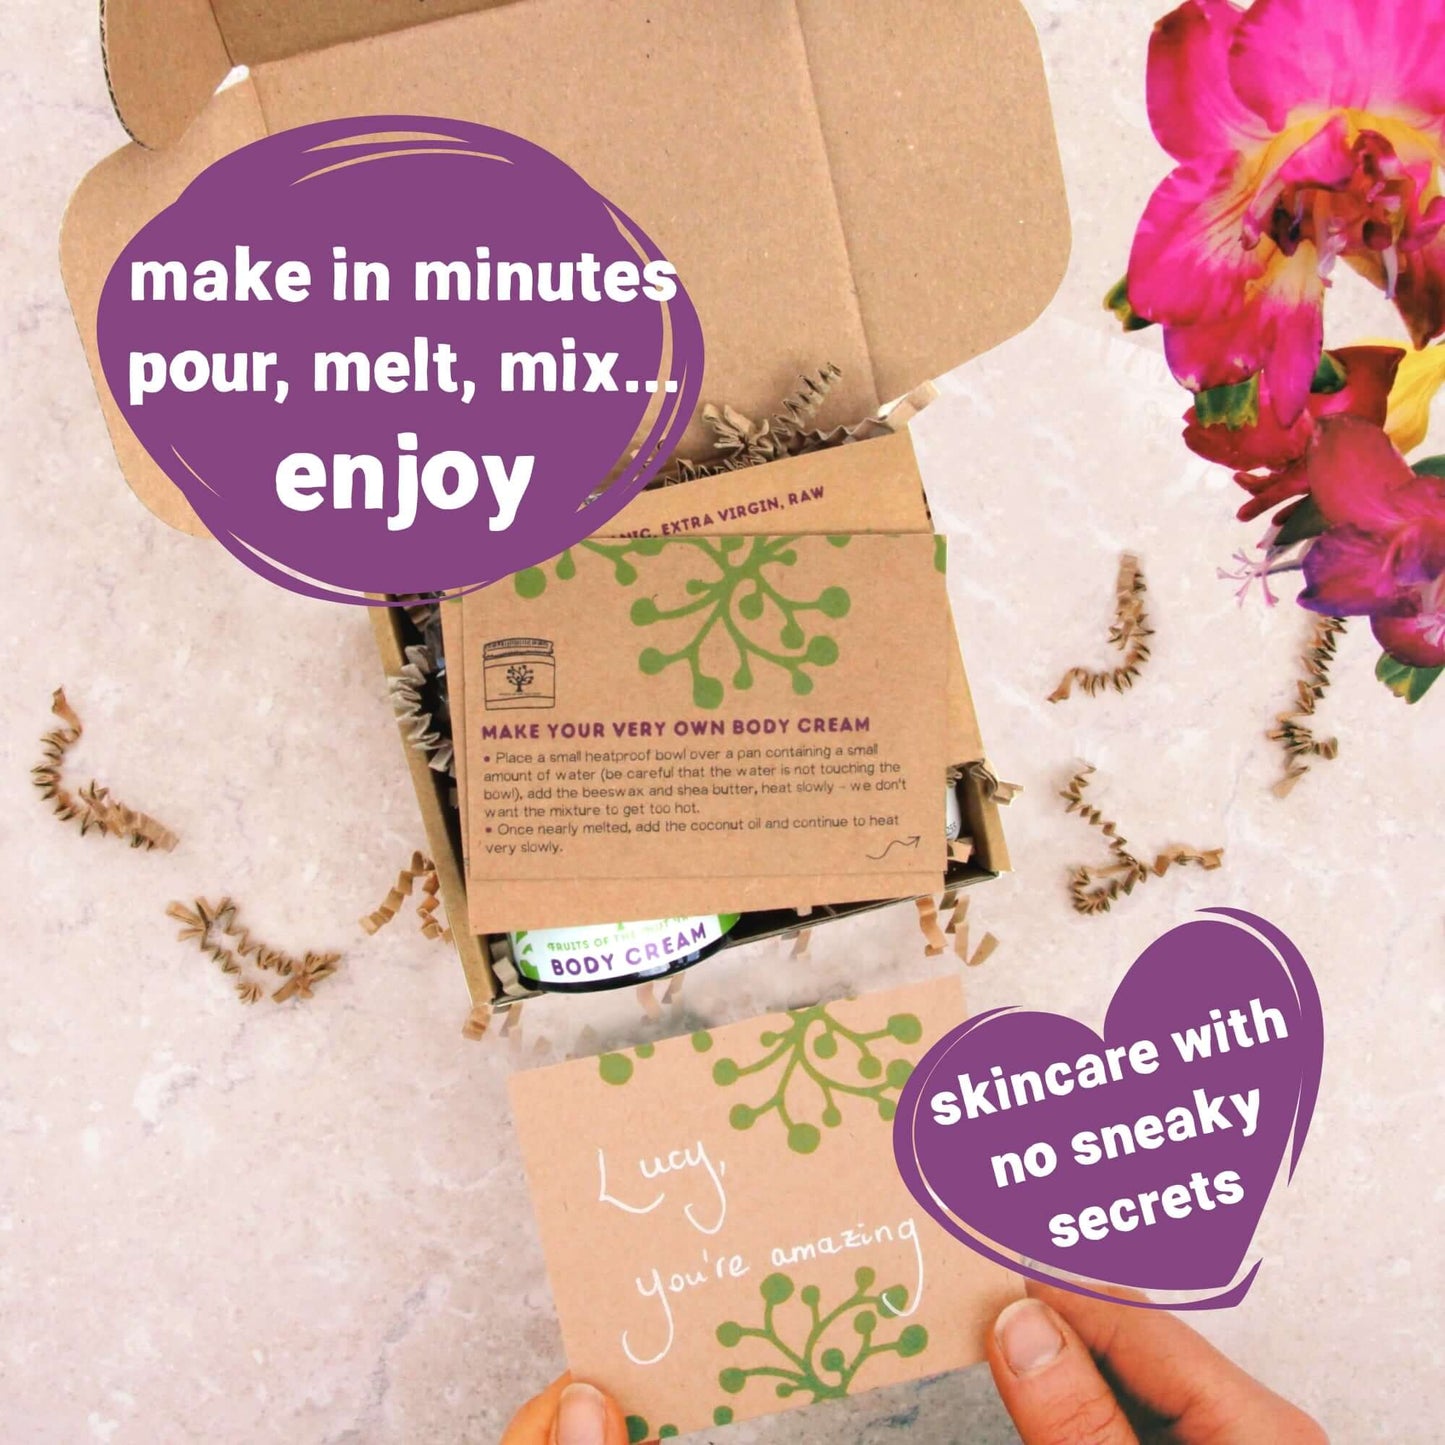 make your own body cream kit inside 65th birthday gift box